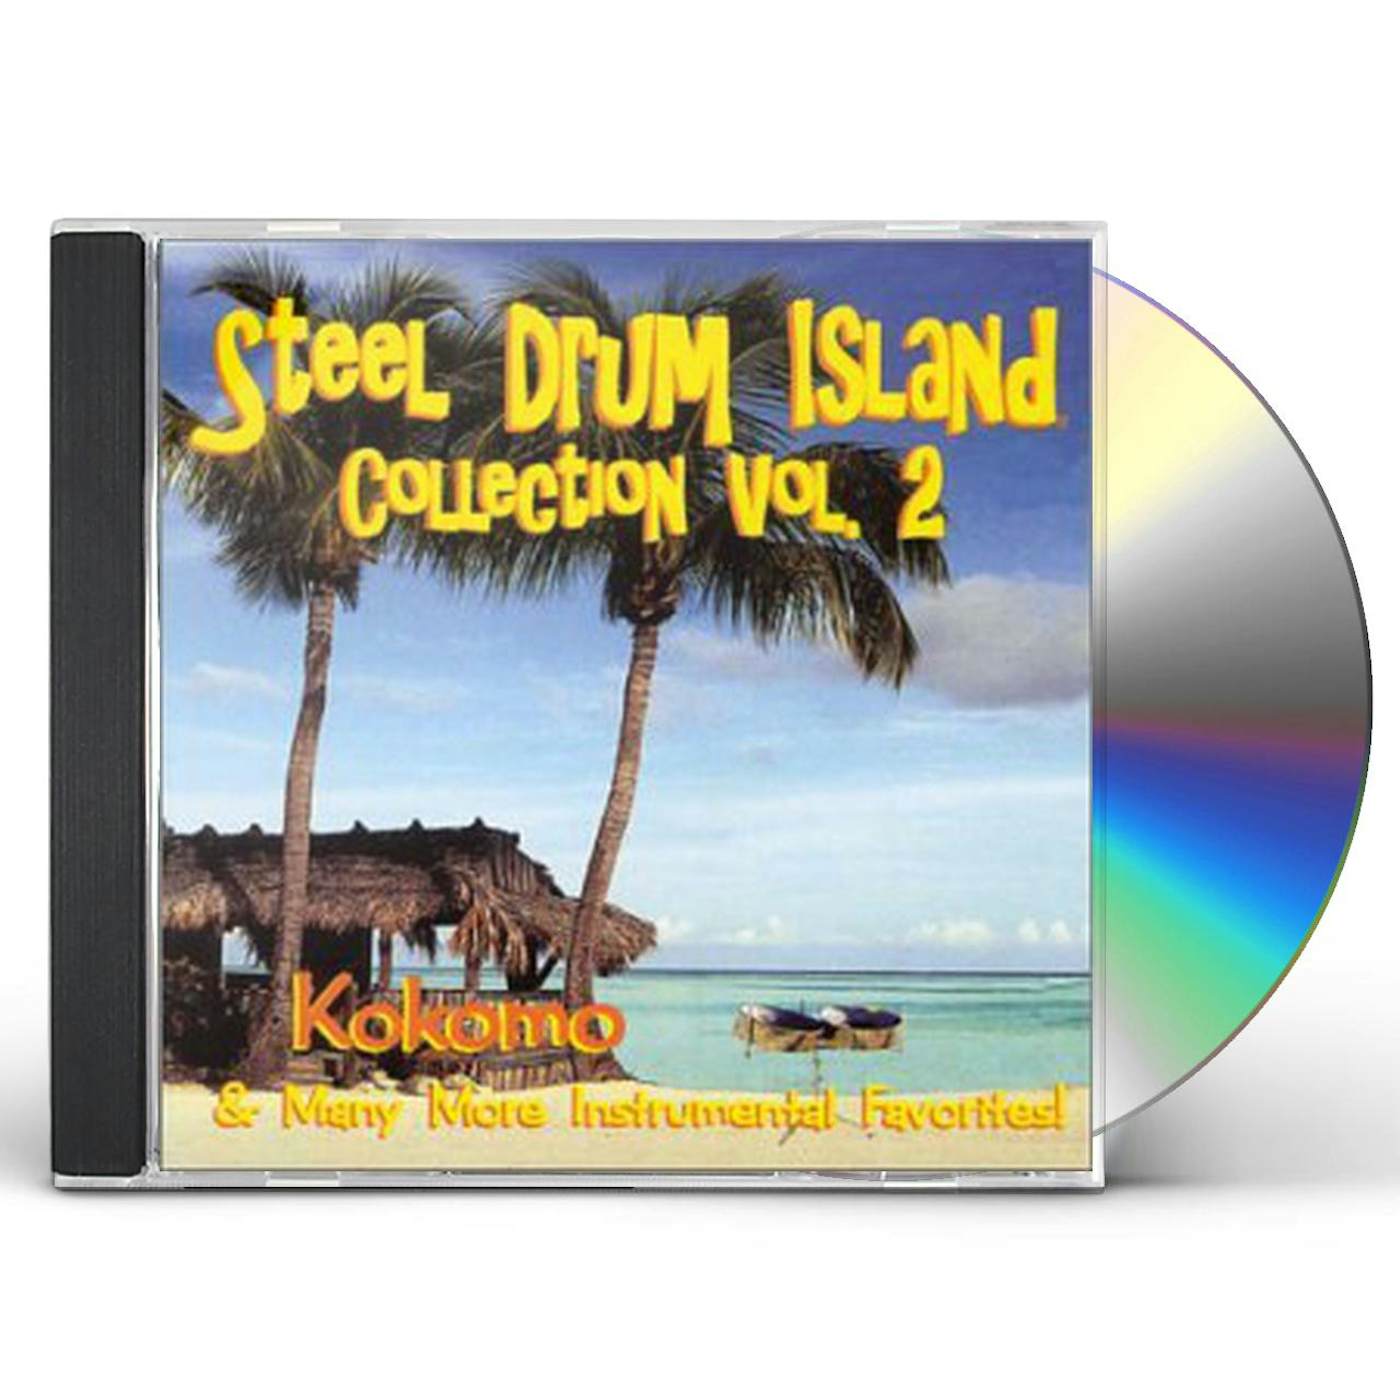 STEEL DRUM ISLAND COLLECTION: KOKOMO & MORE ON CD